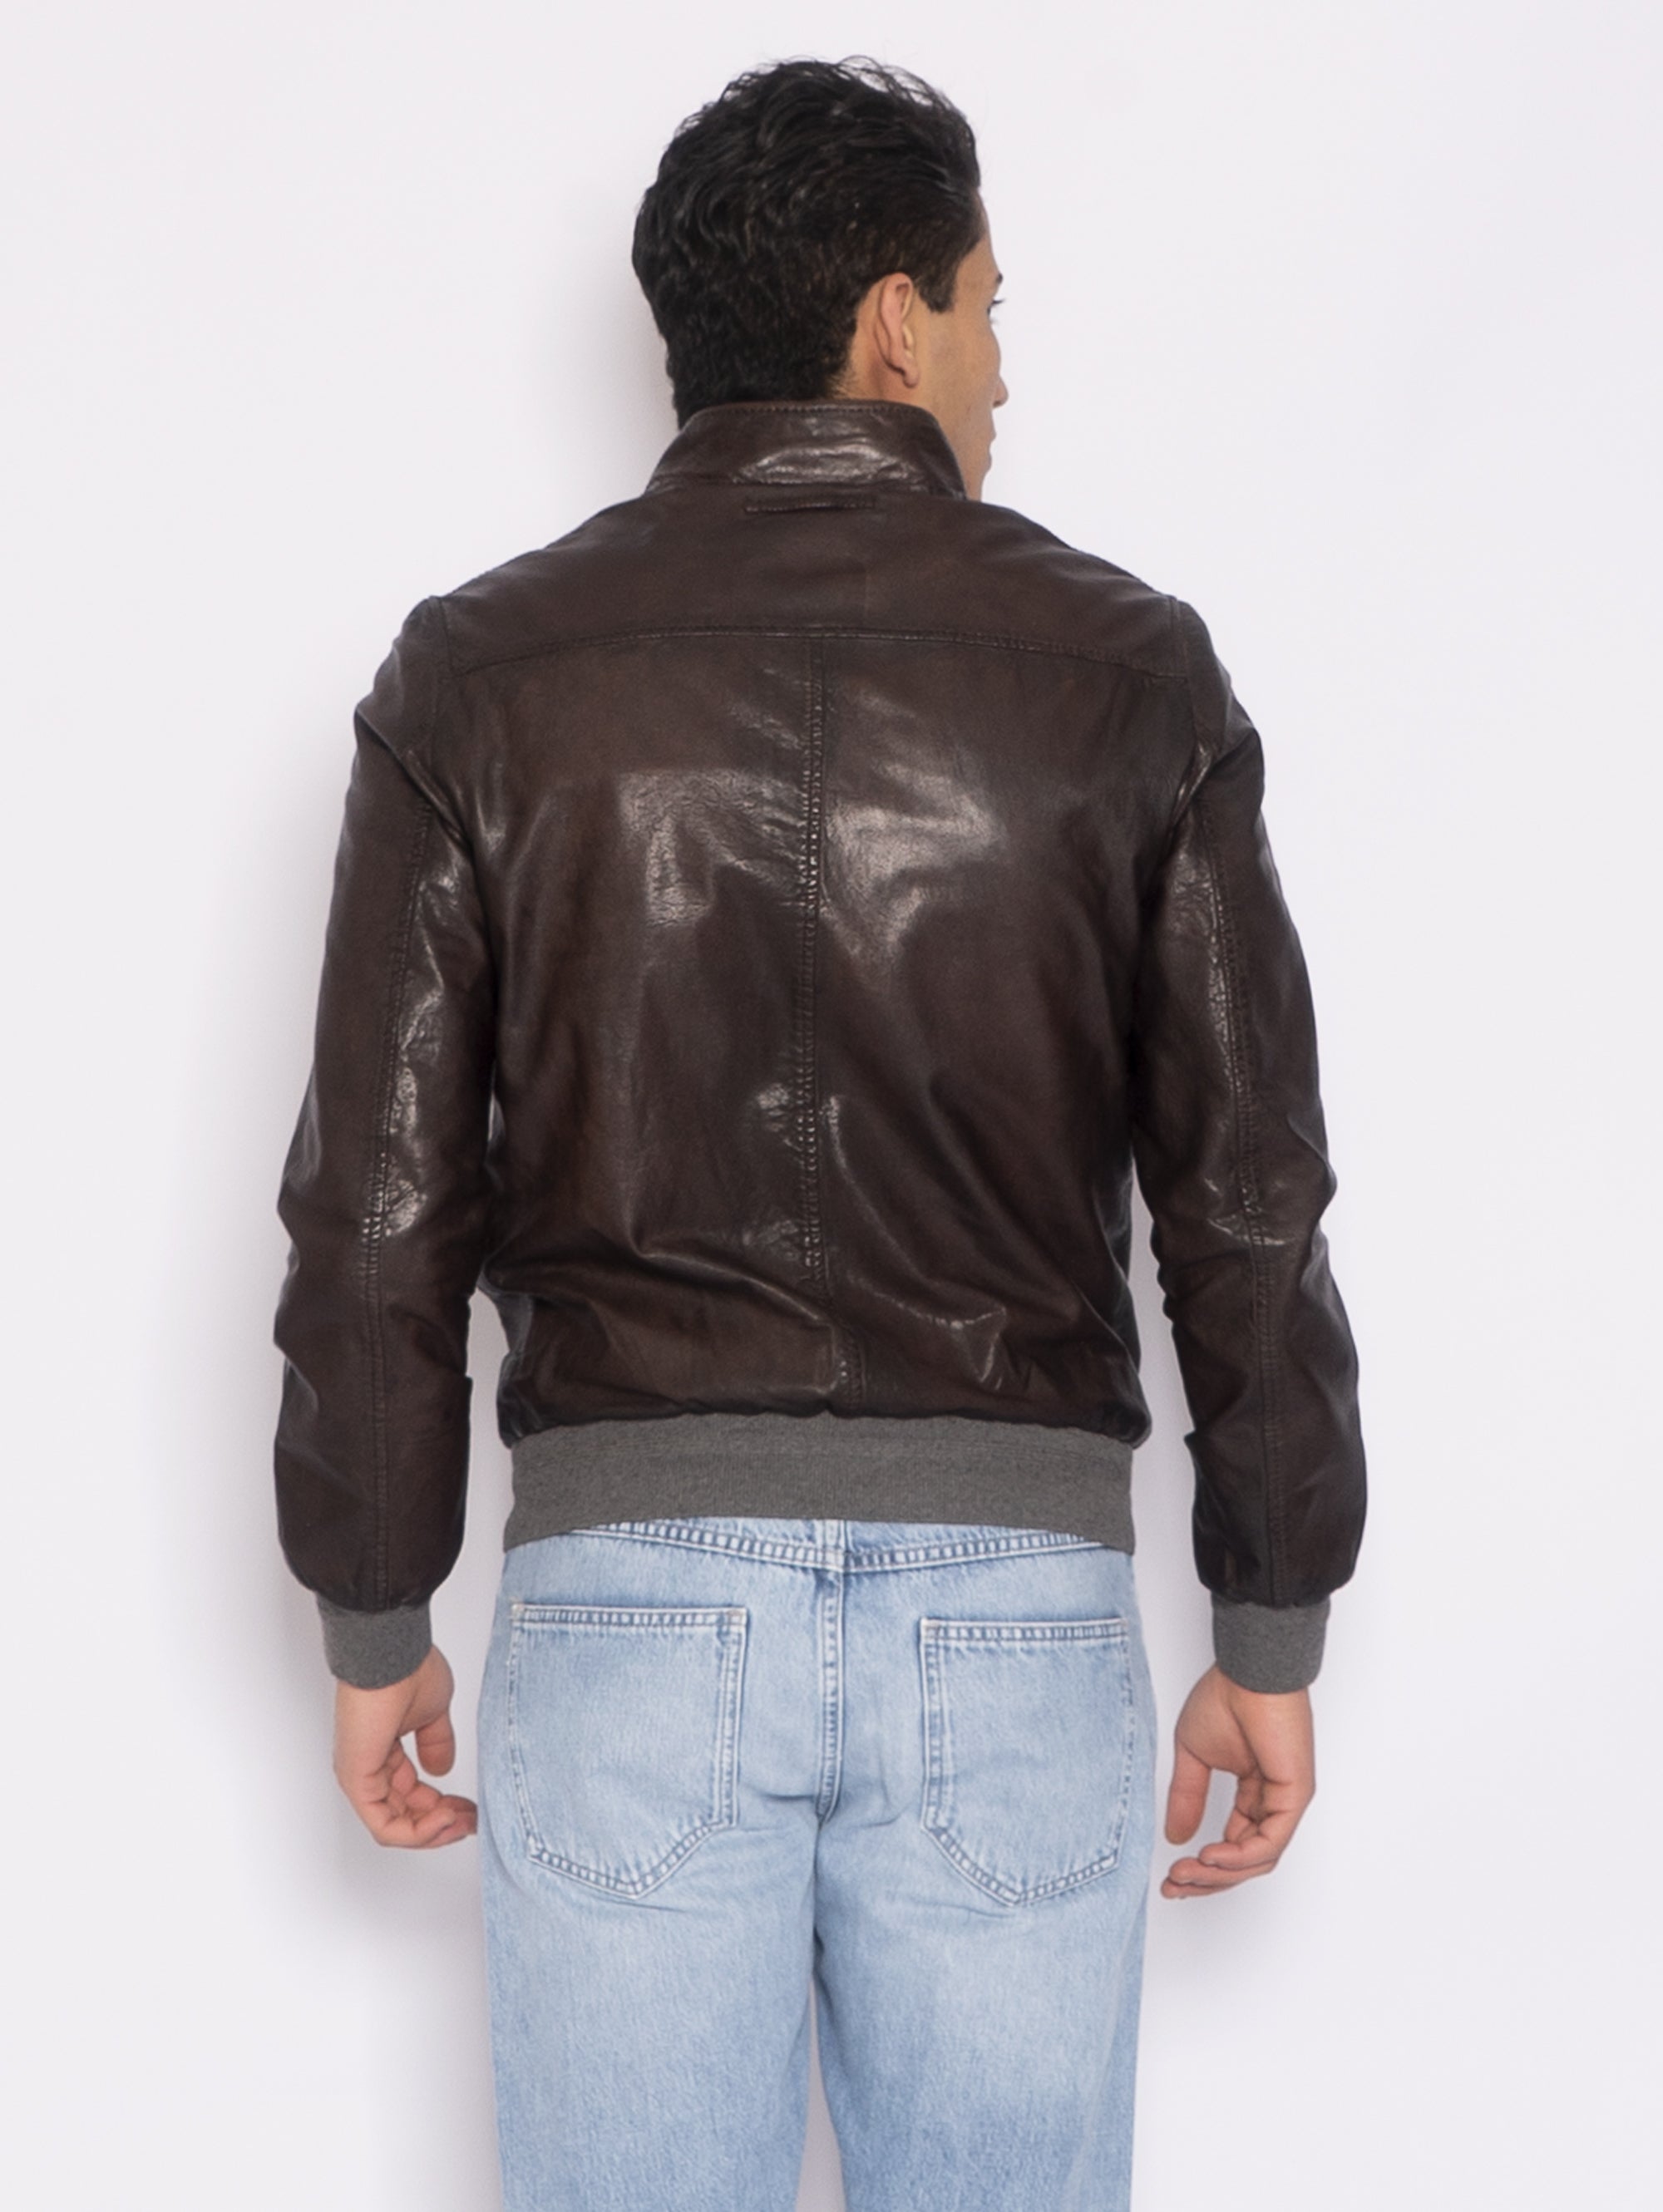 Harrington-Jacke aus dunkelbraunem Leder